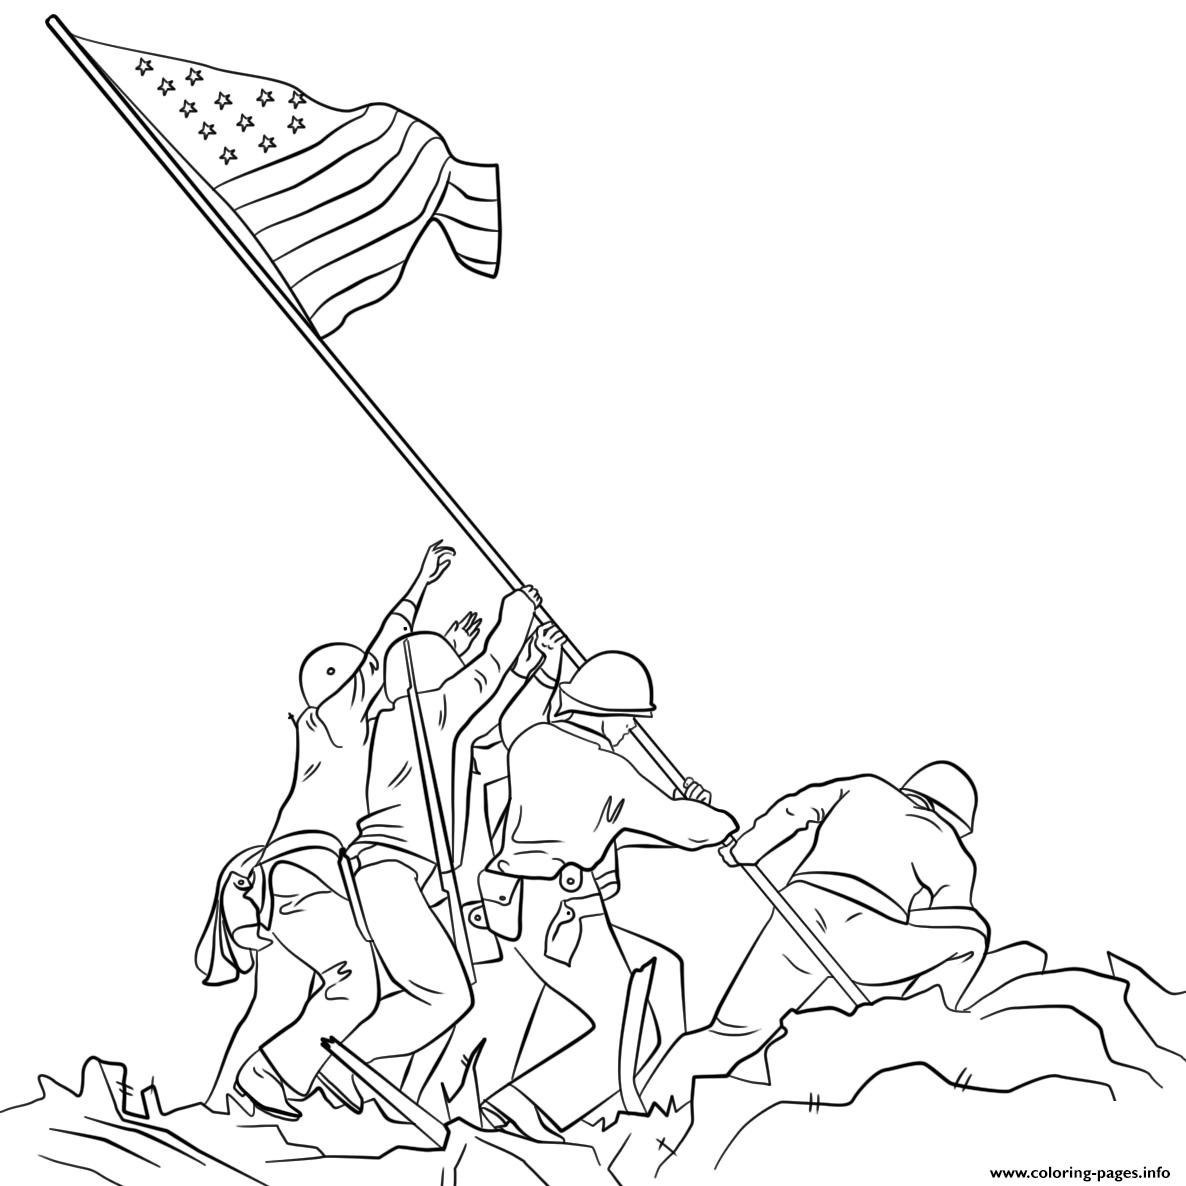 Raising The Flag On Iwo Jima coloring